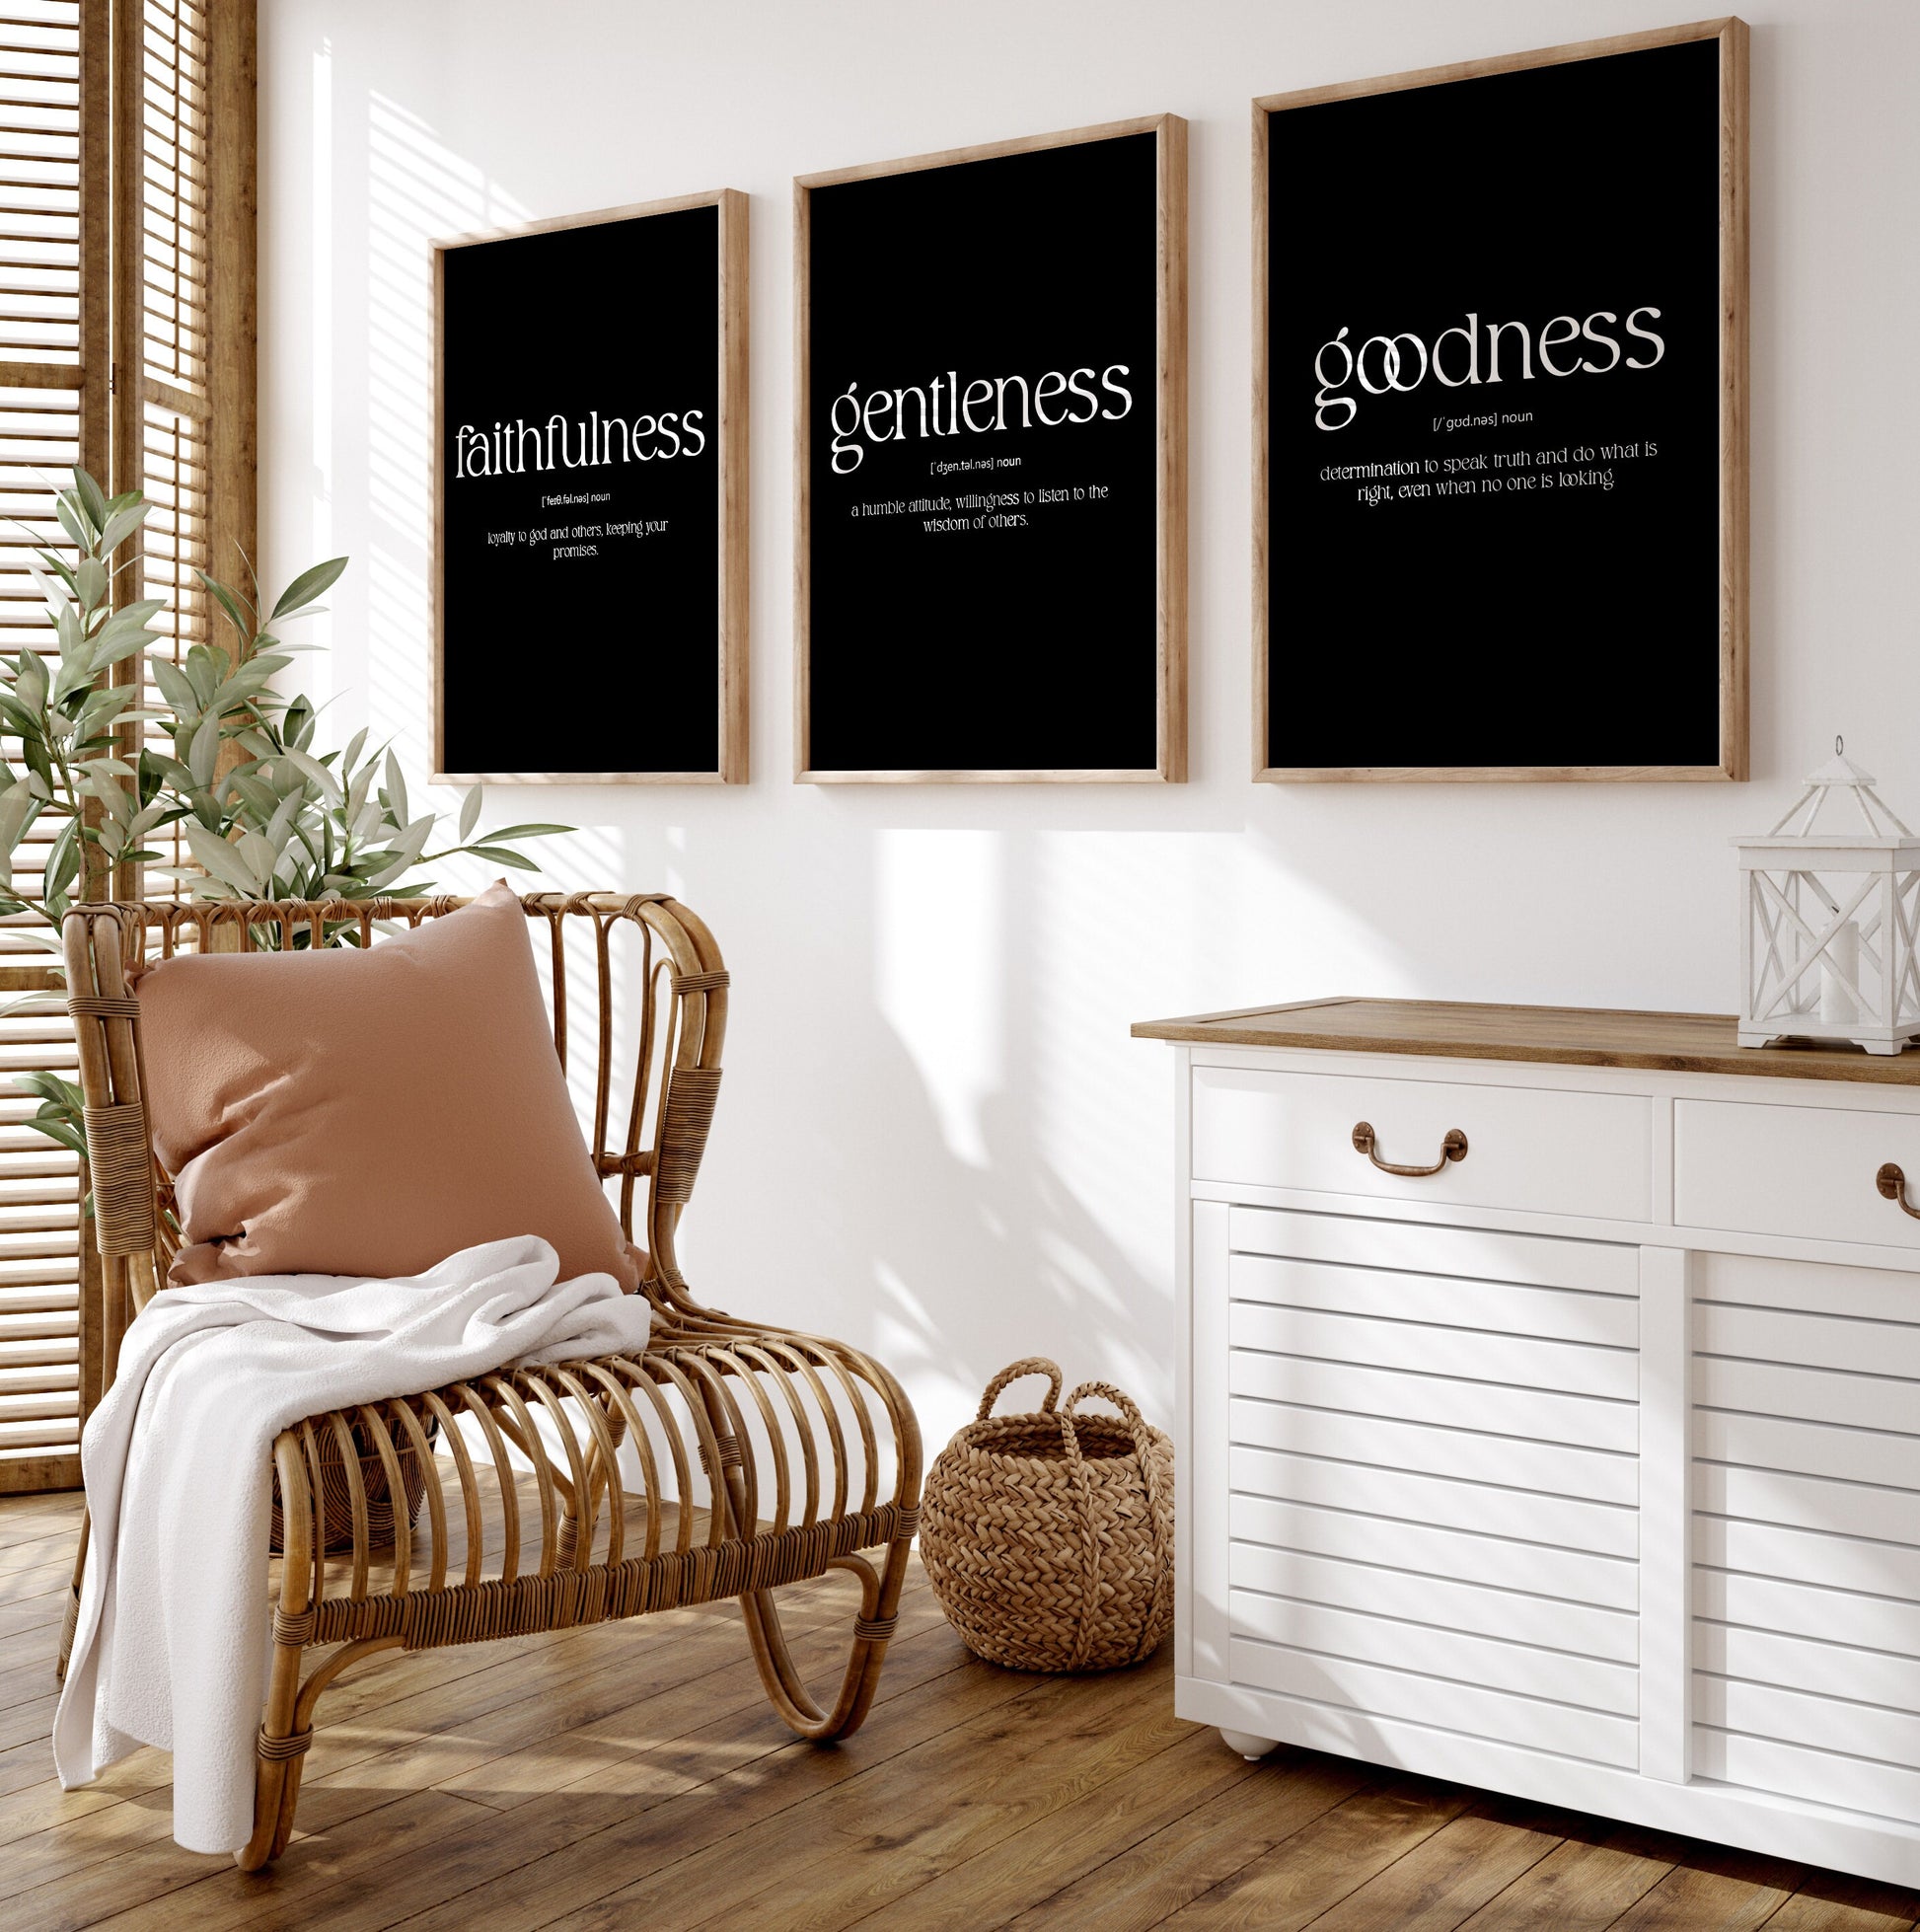 Faithfulness, Gentleness, Goodness Set Of 3 Definition Prints - Magic Posters